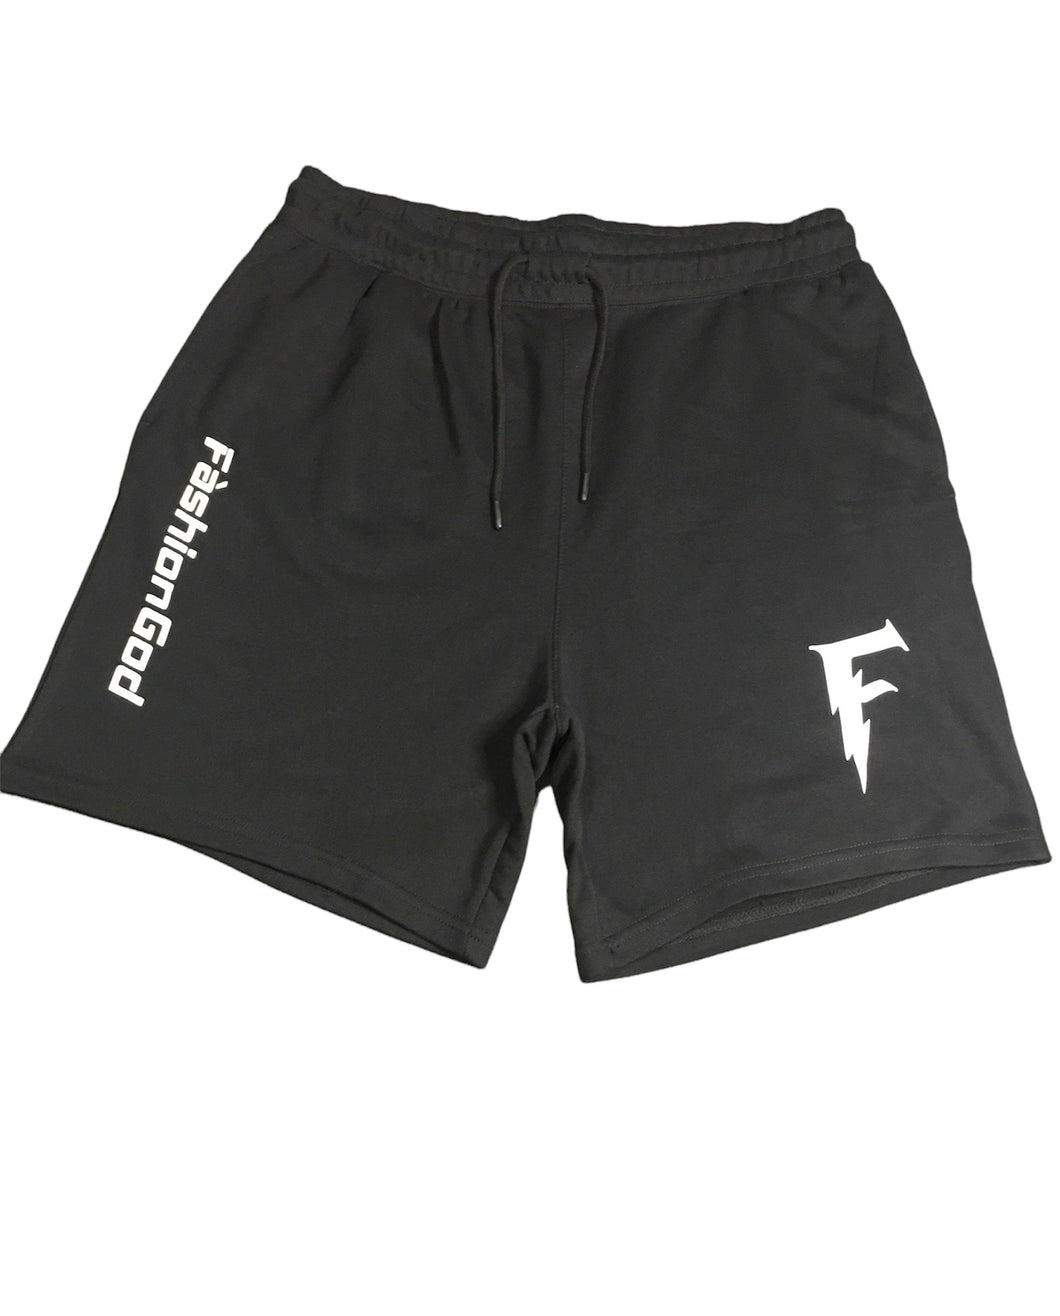 FG Shorts (Black)